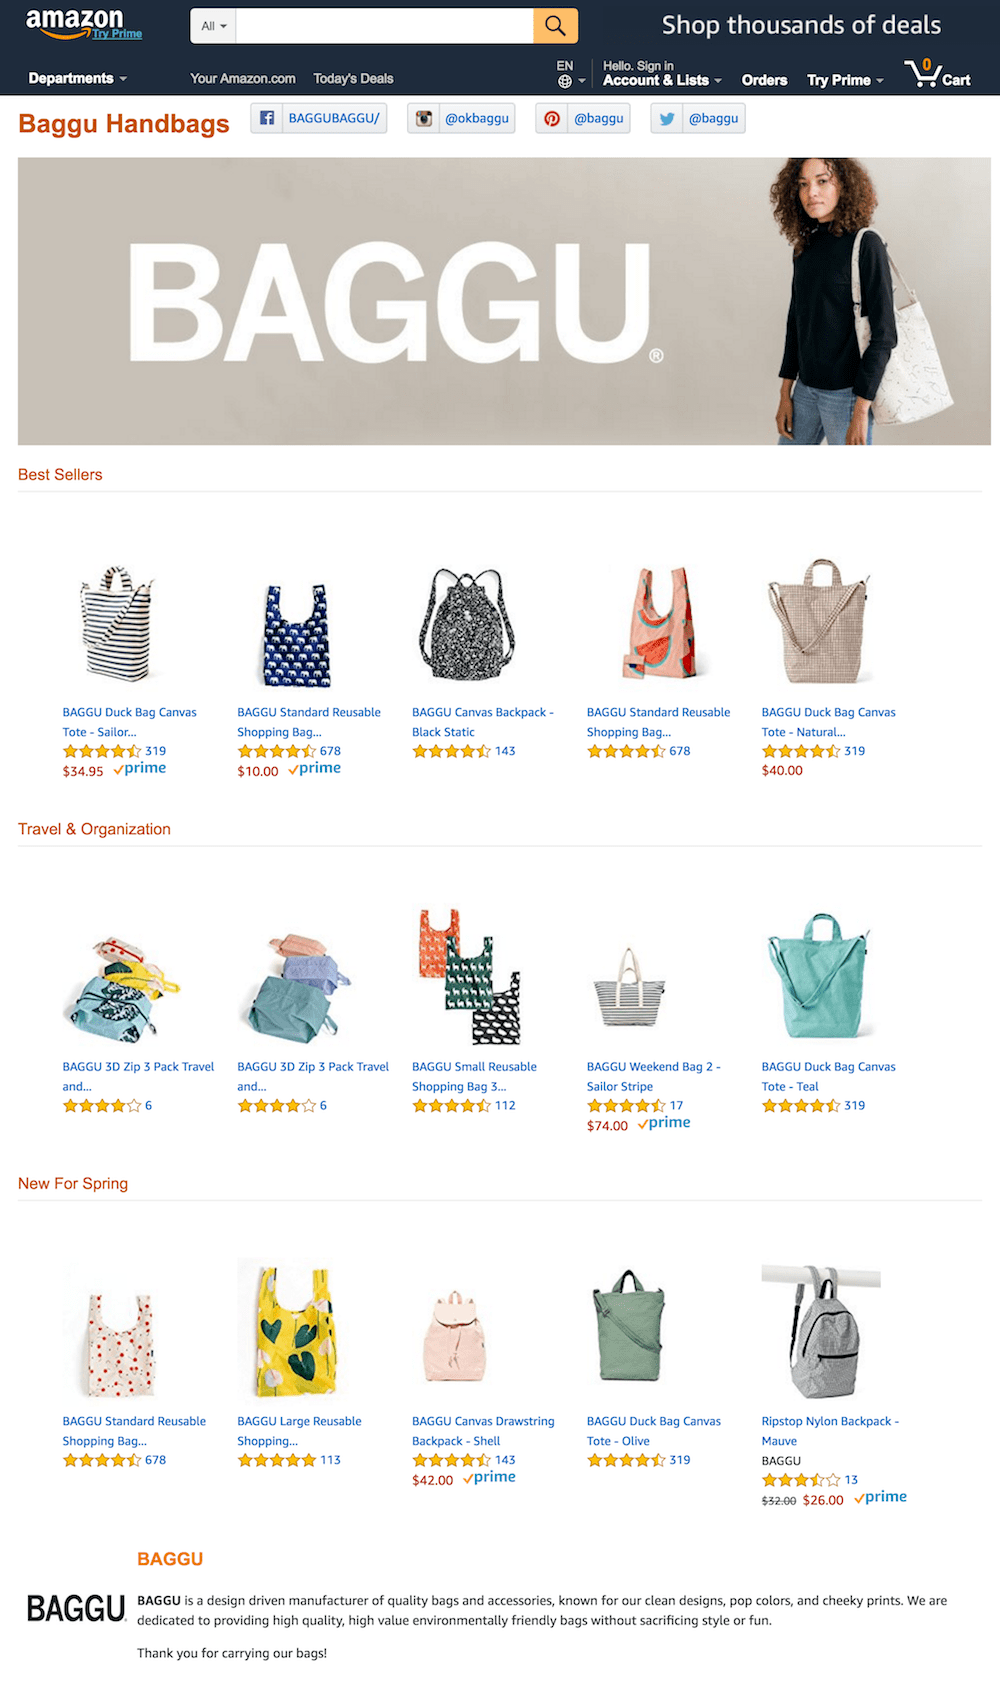 Amazon Brand Page